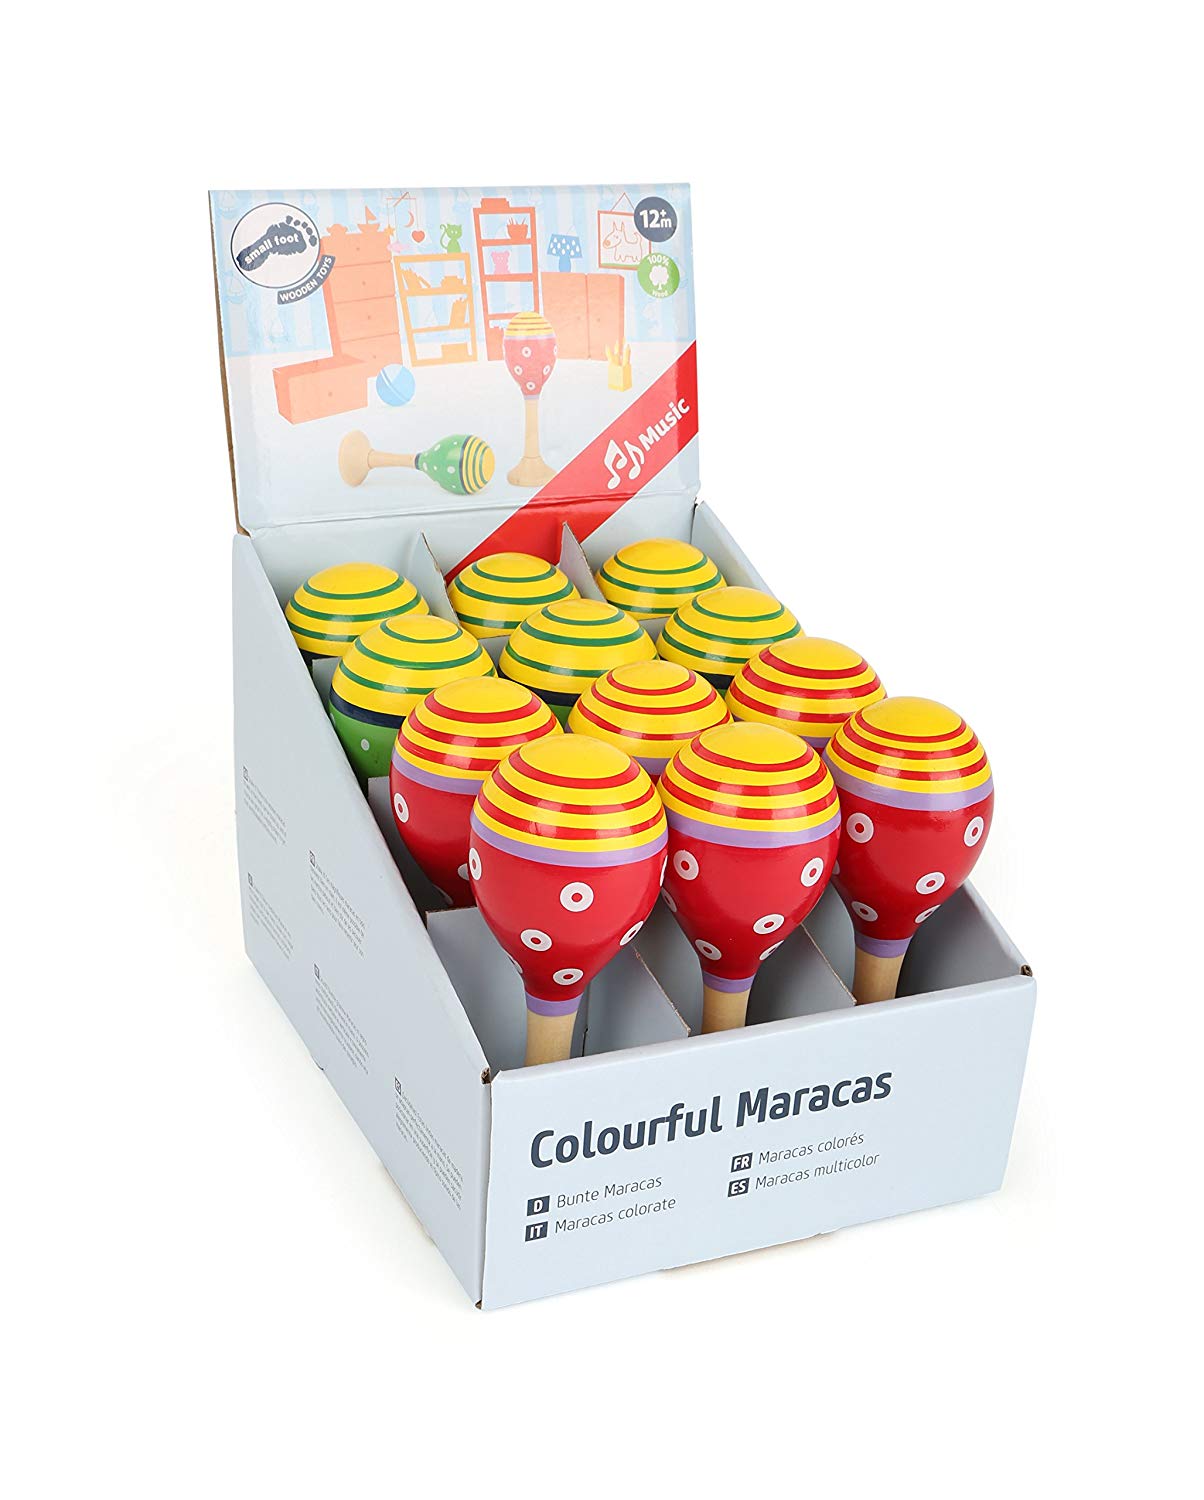 Display With Colourful Maracas Multi Coloured